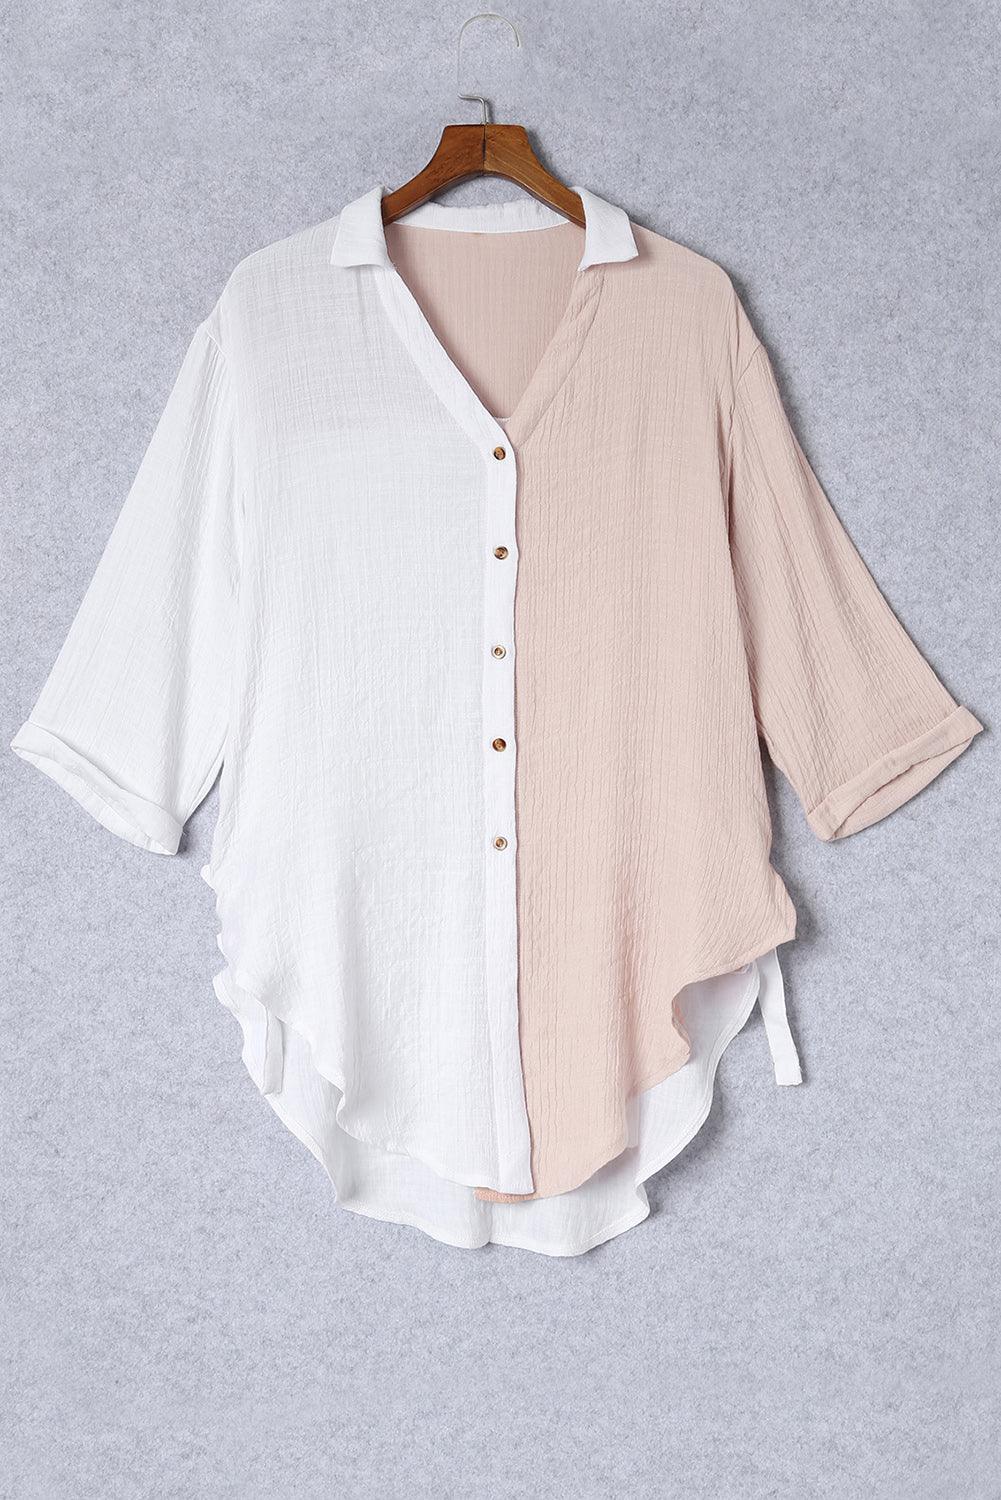 White Colorblock V Neck Collared Side Slits Shirt - Ninonine